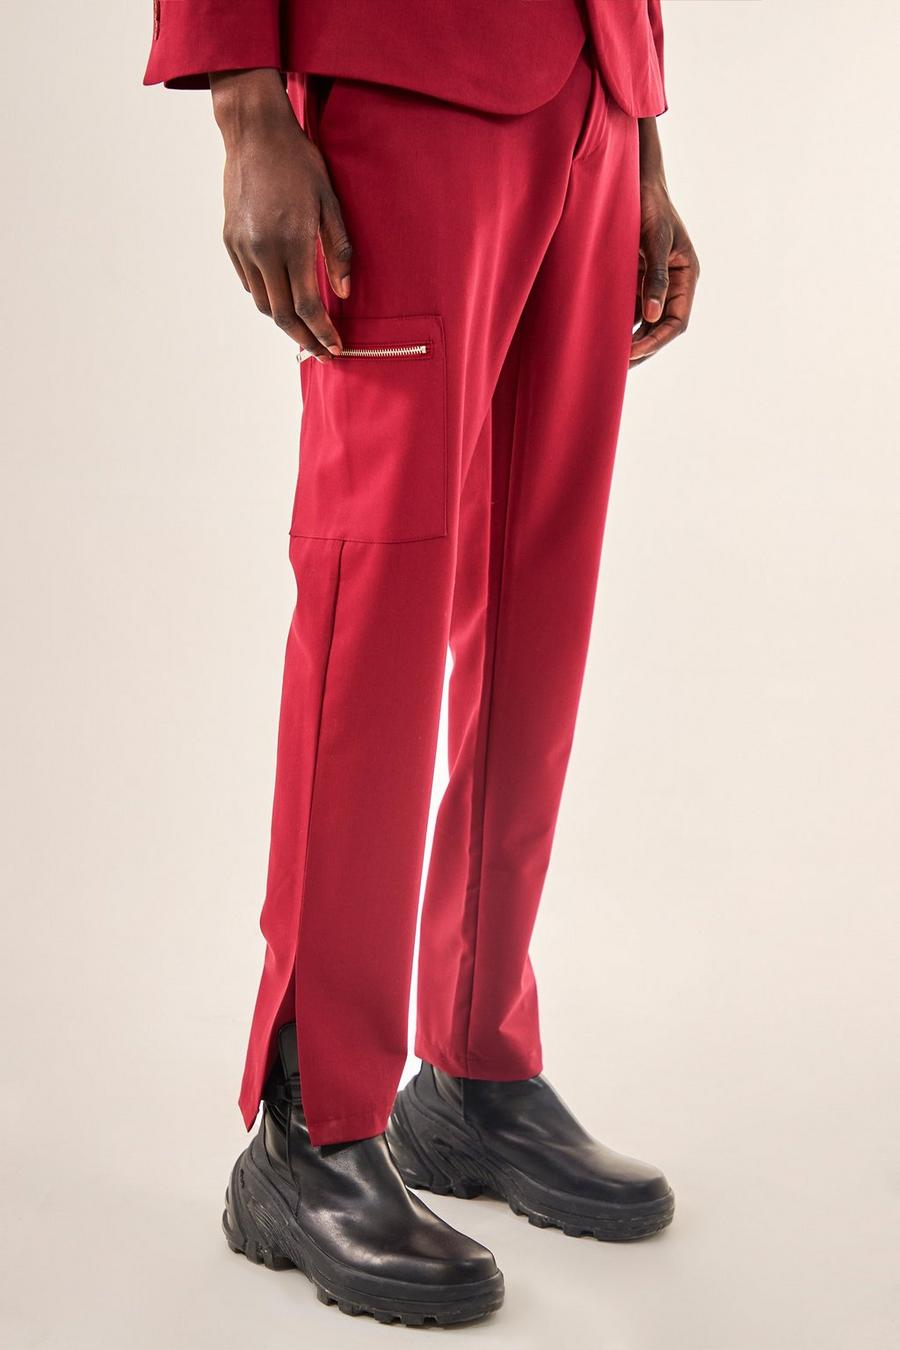 Pantalon de costume skinny zippé avec chaîne, Burgundy rot